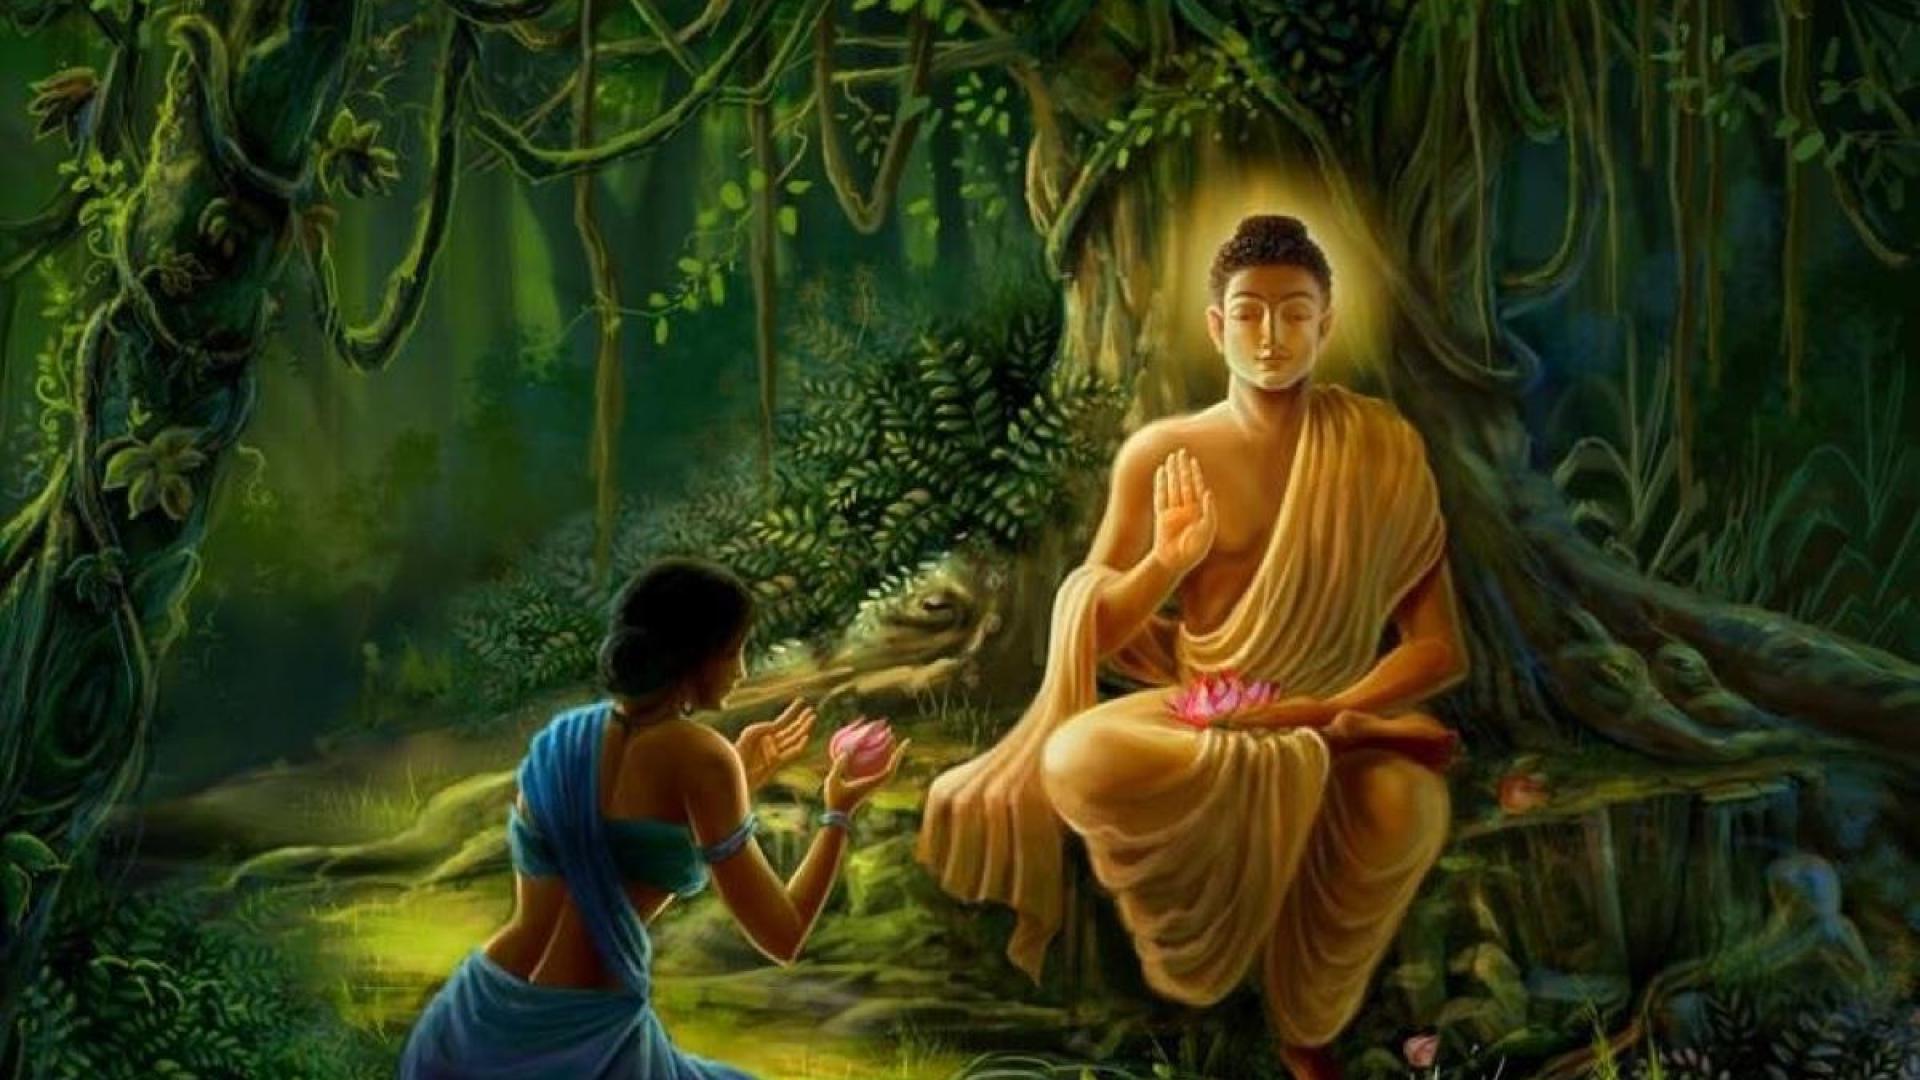 Buddha Wallpaper HD 1080p Free Download. Hindu Gods and Goddesses